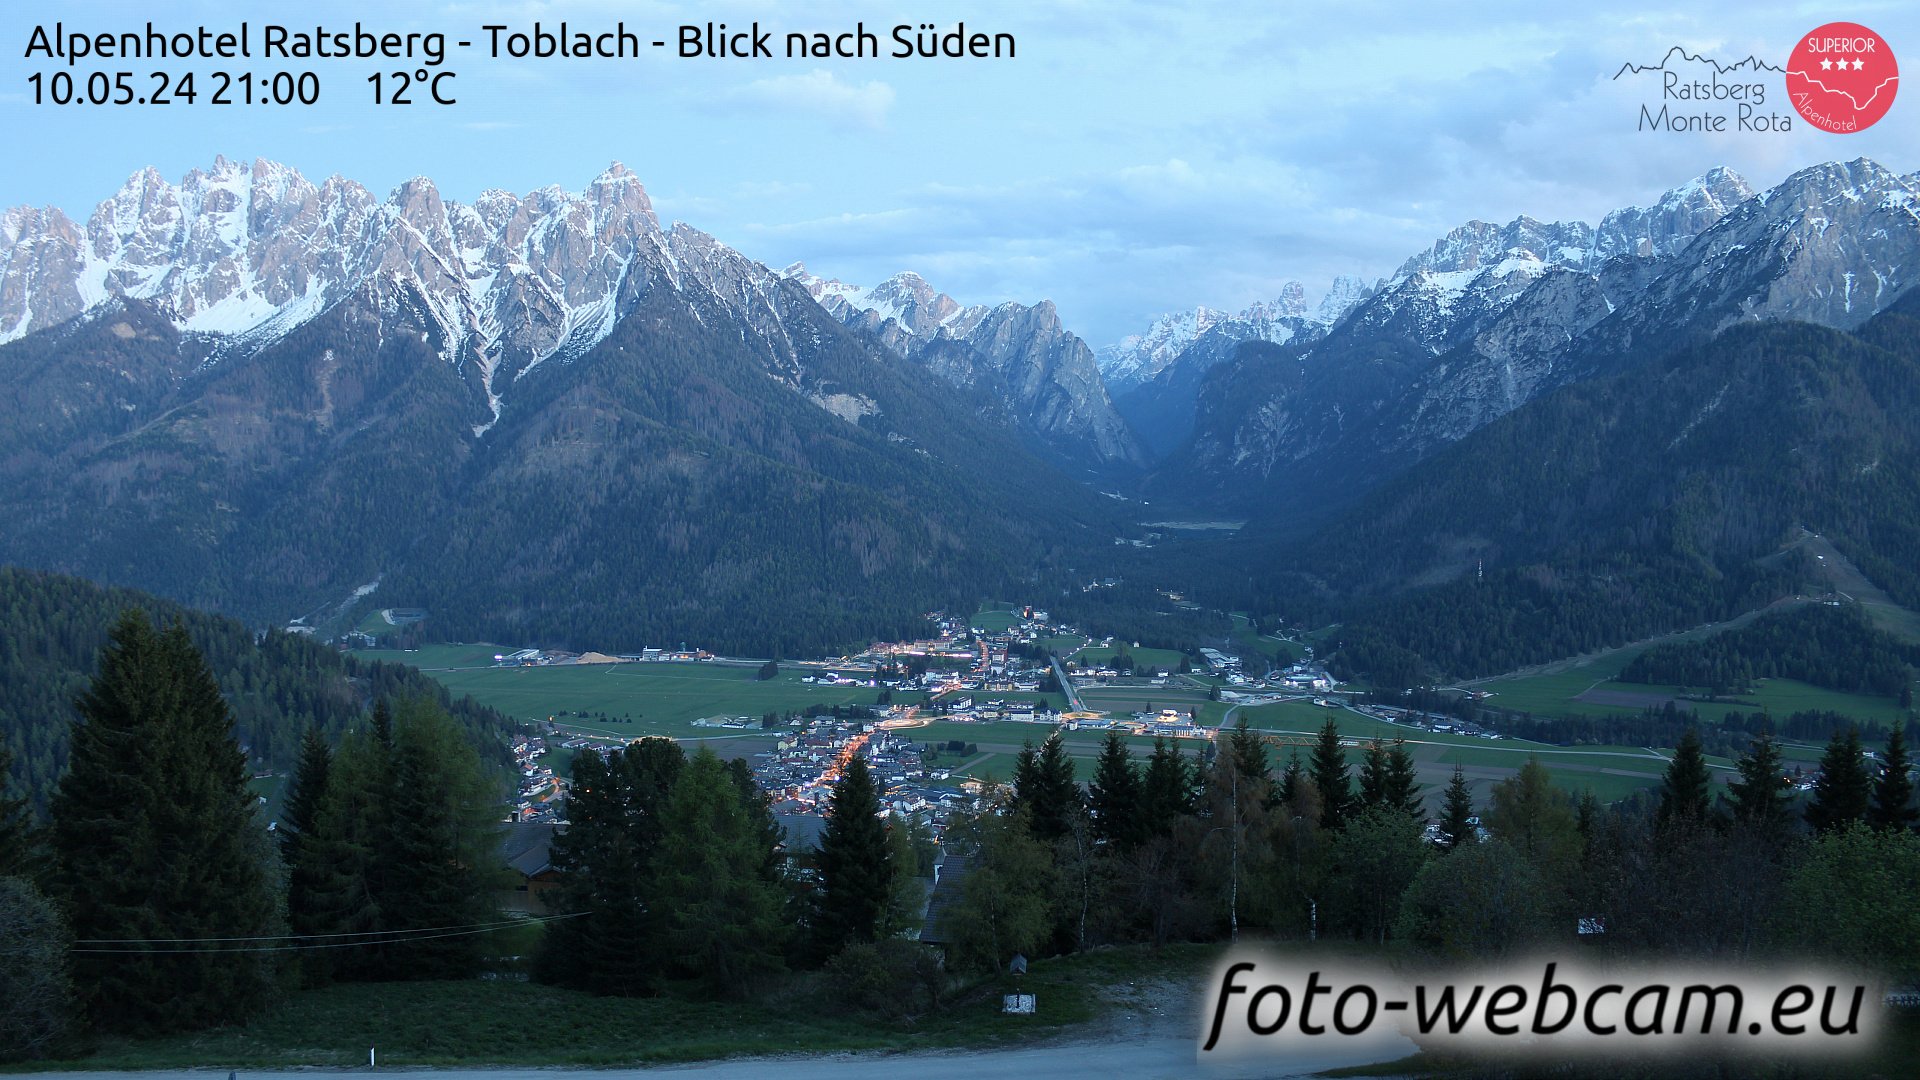 Toblach (Dolomites) Thu. 21:03